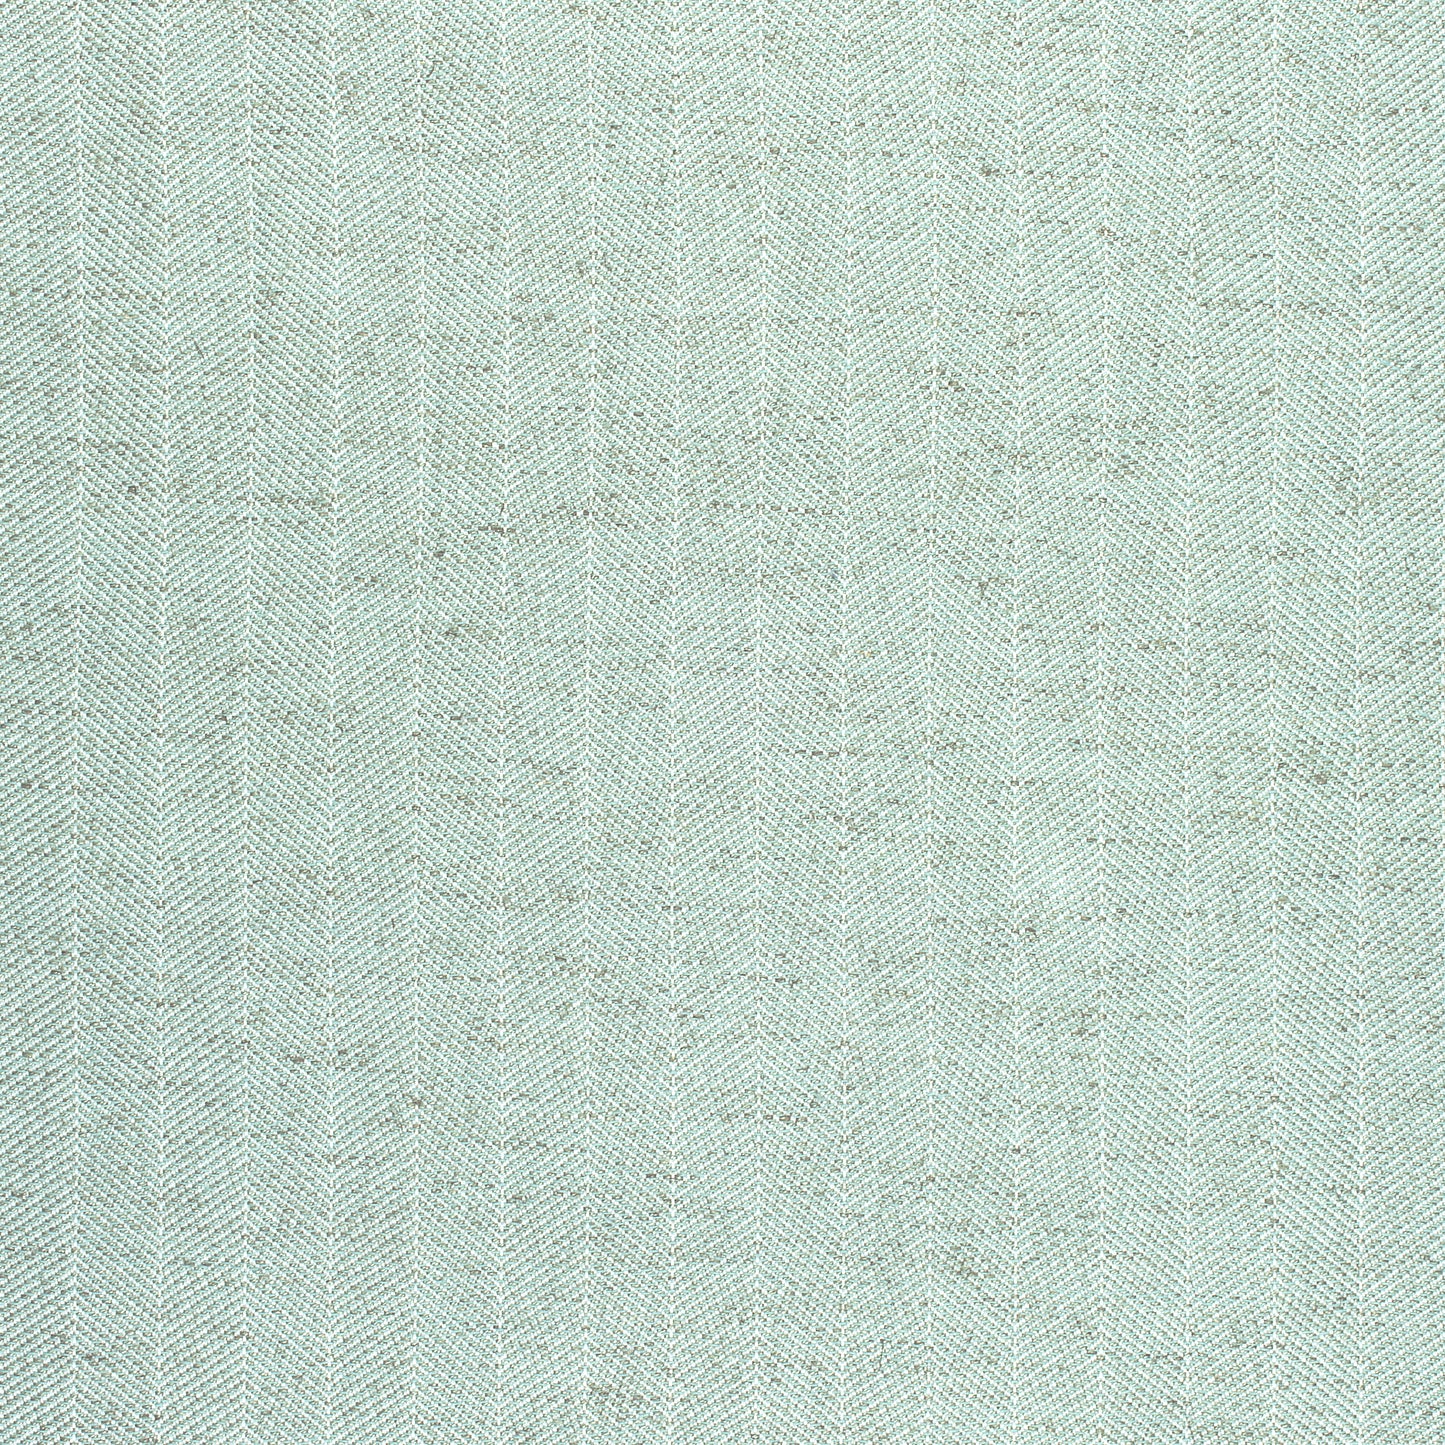 Purchase Thibaut Fabric Item W80670 pattern name Hamilton Herringbone color Celadon